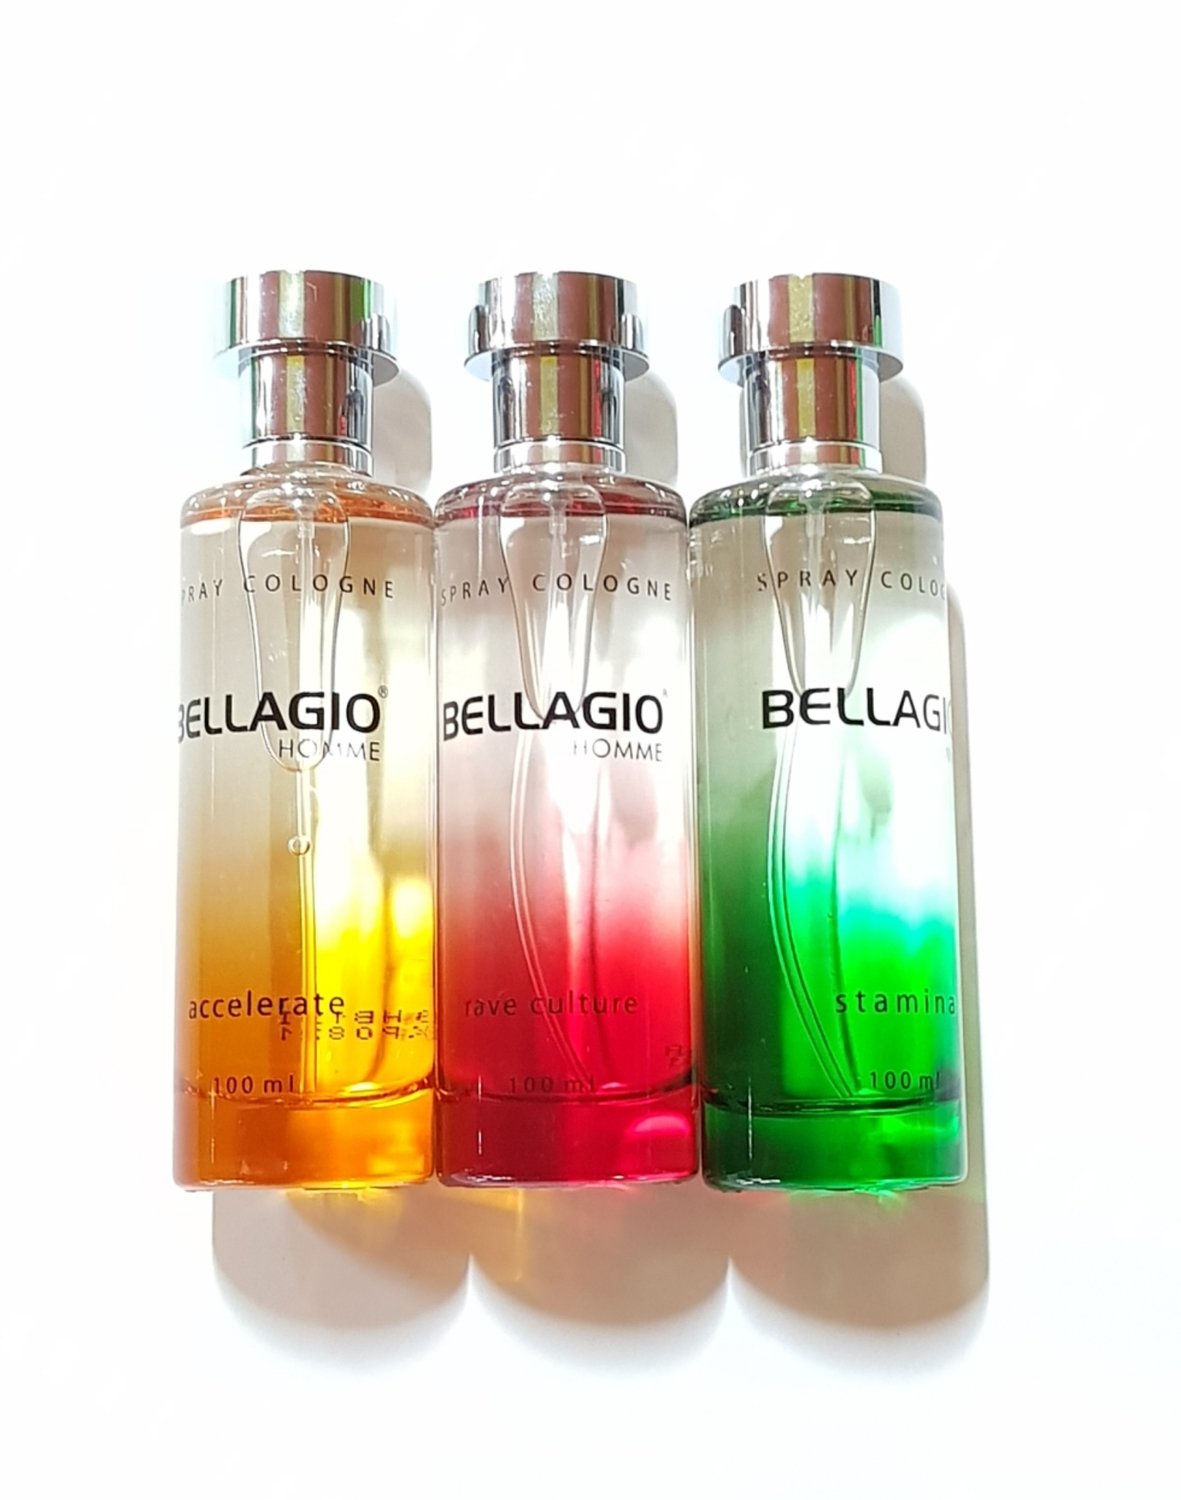 Parfum Bellagio 100 ml (Warna Merah)